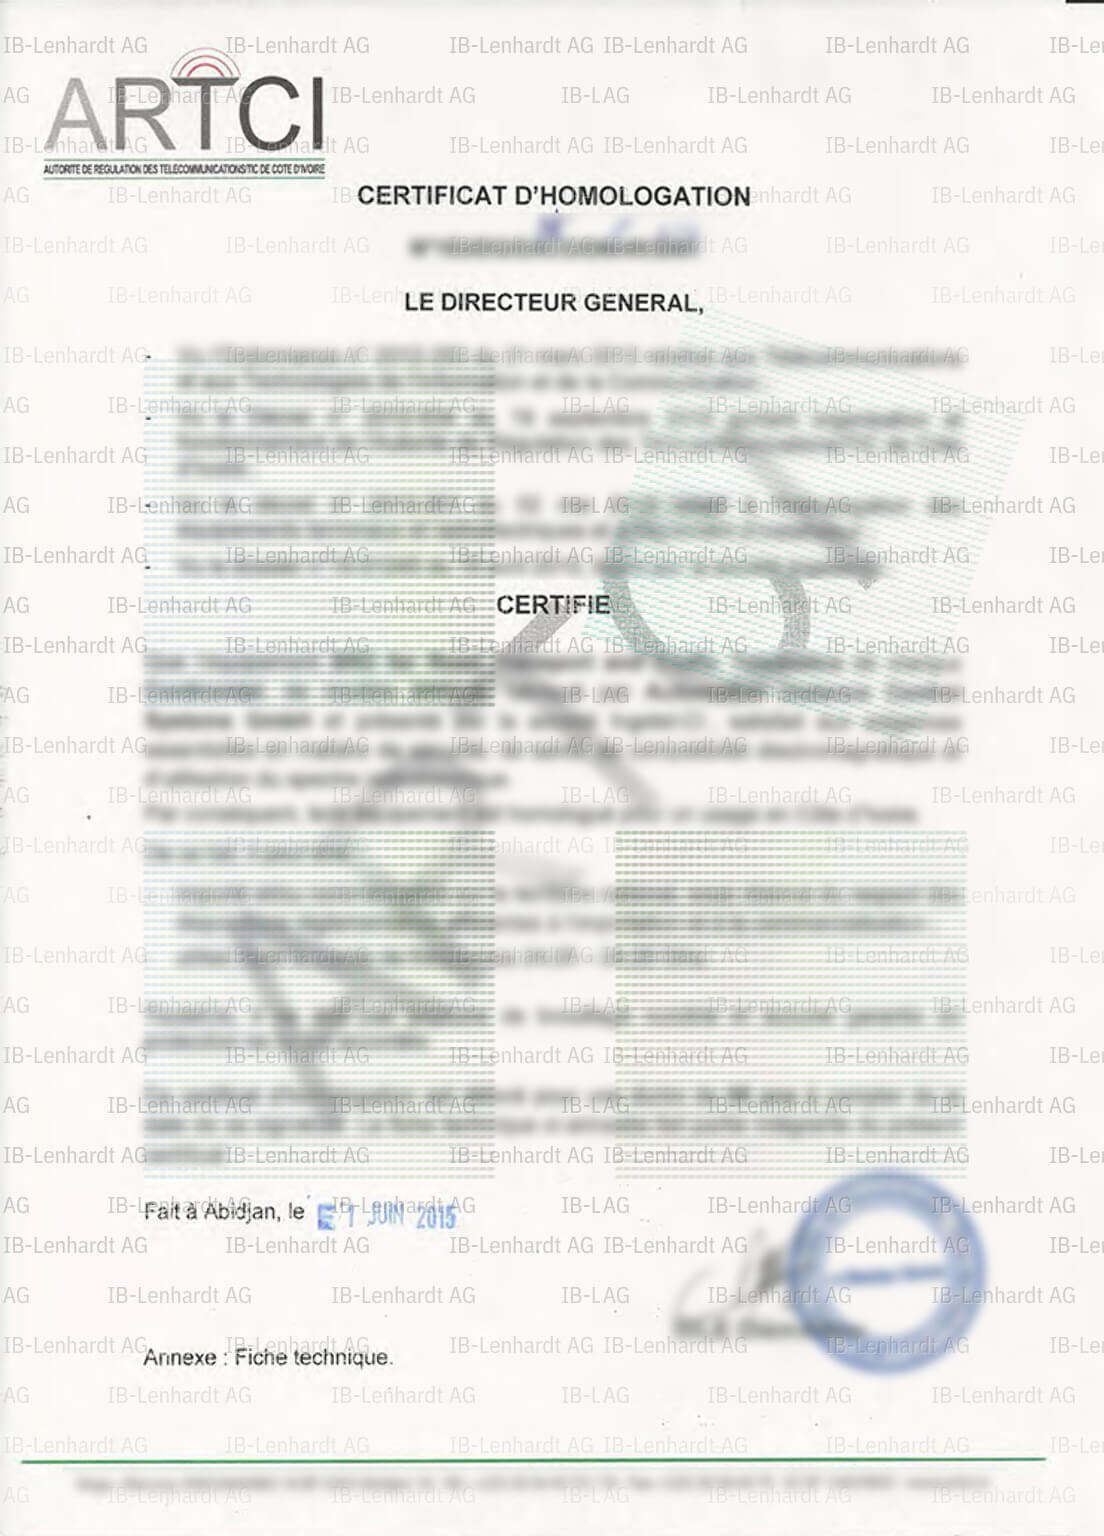 Certificate example Ivory Coast